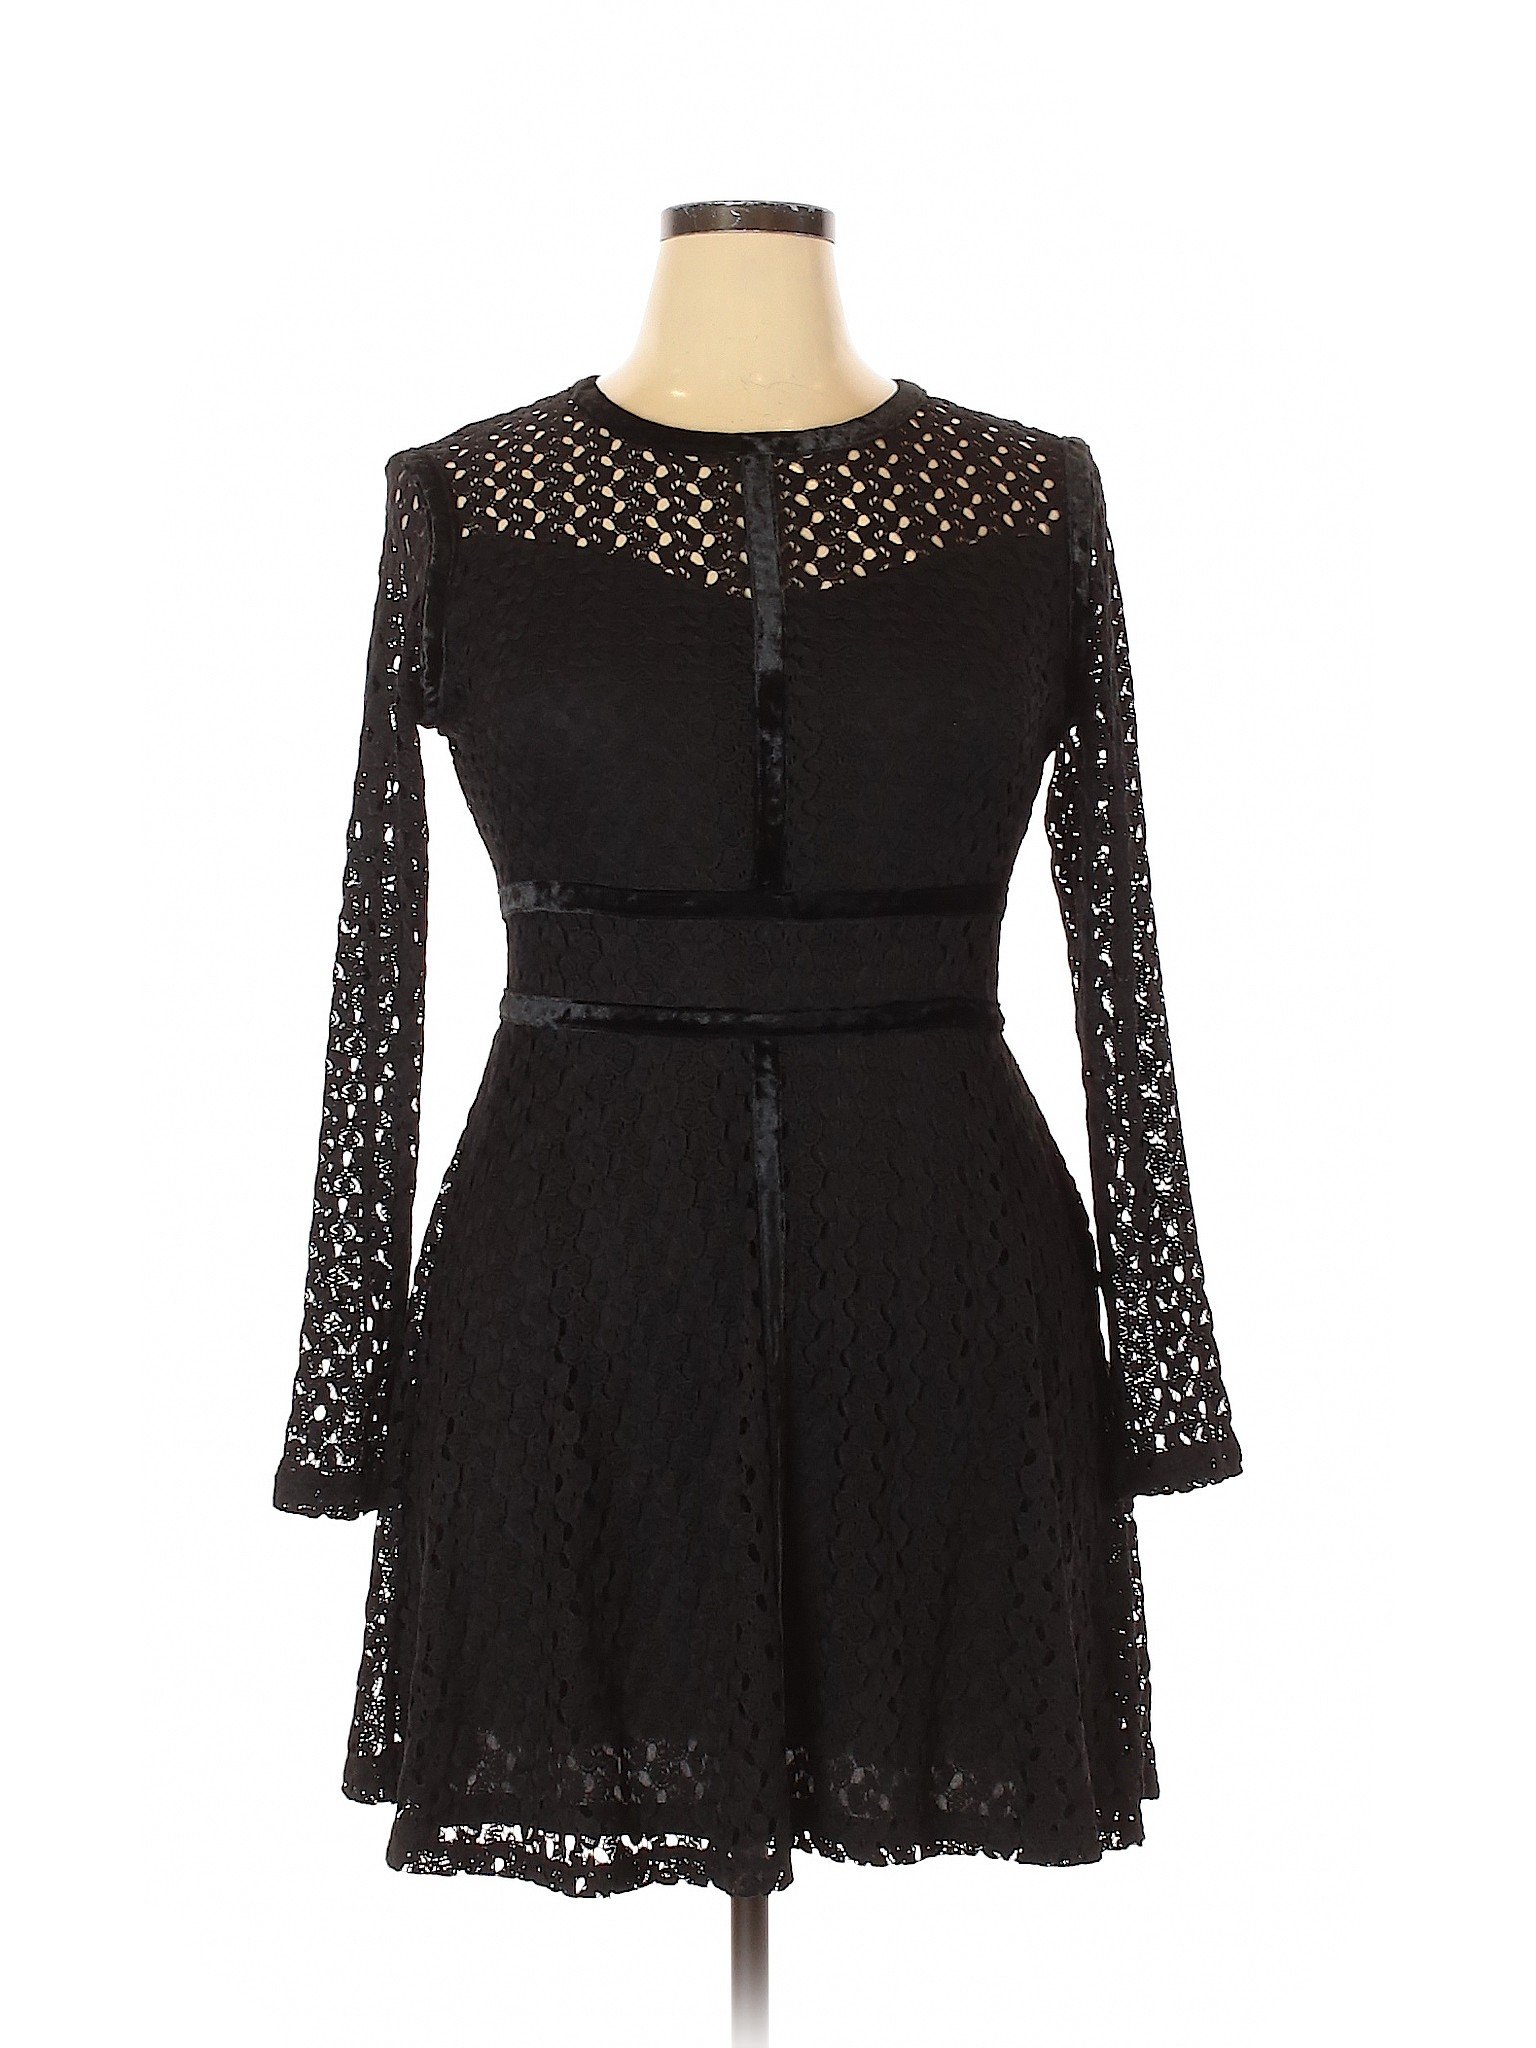 Xhilaration Women Black Cocktail Dress XL | eBay